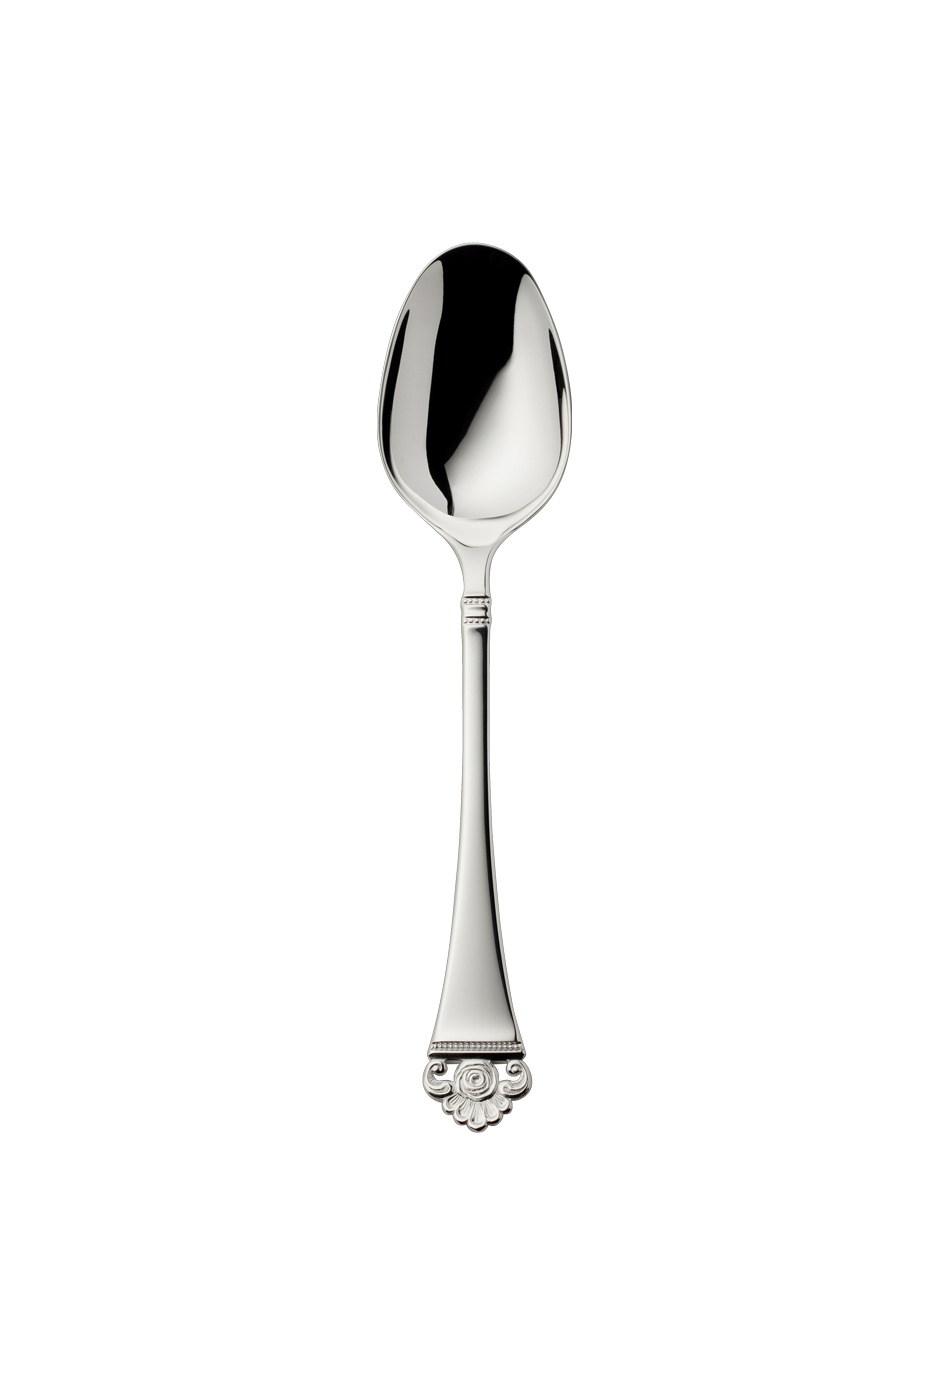 Rosenmuster Dessert Spoon (150g massive silverplated)